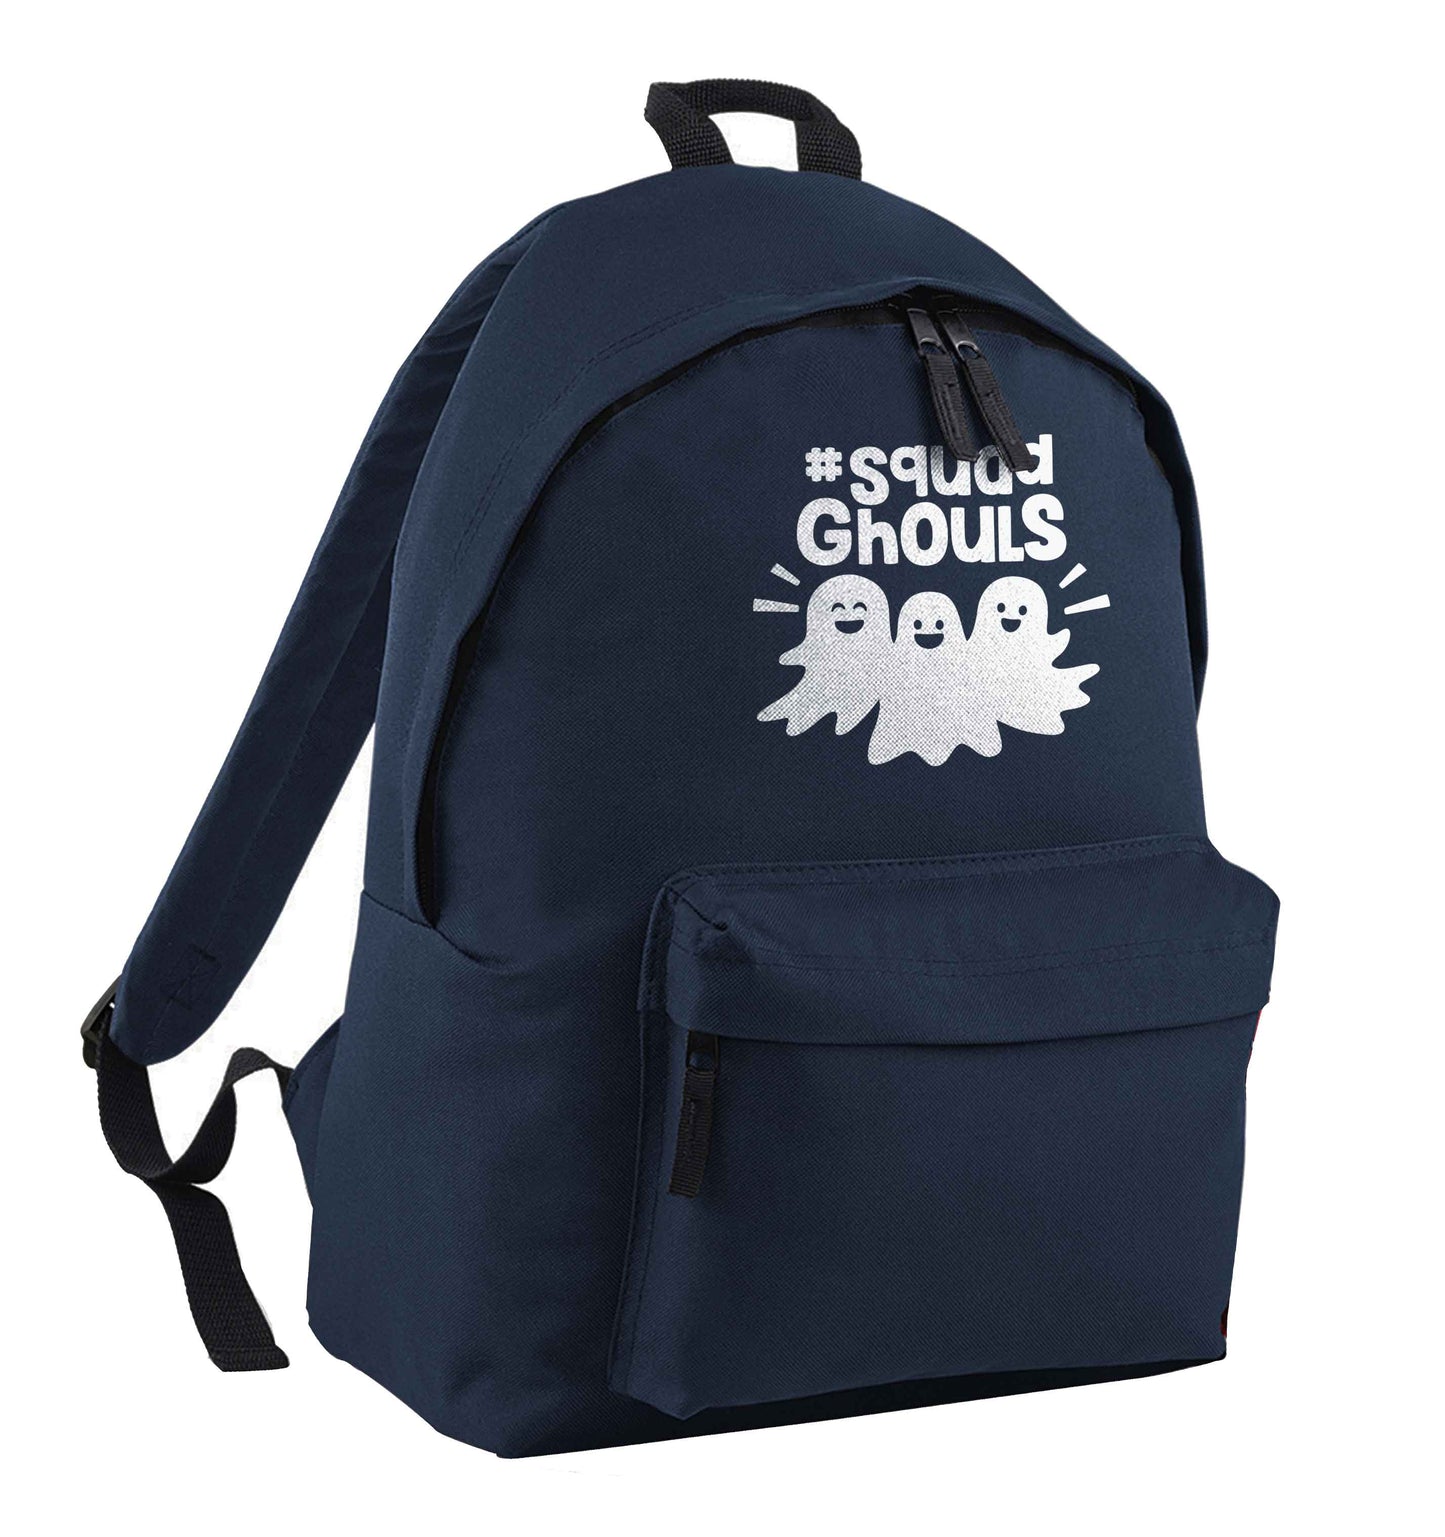 Squad ghouls Kit navy children's backpack